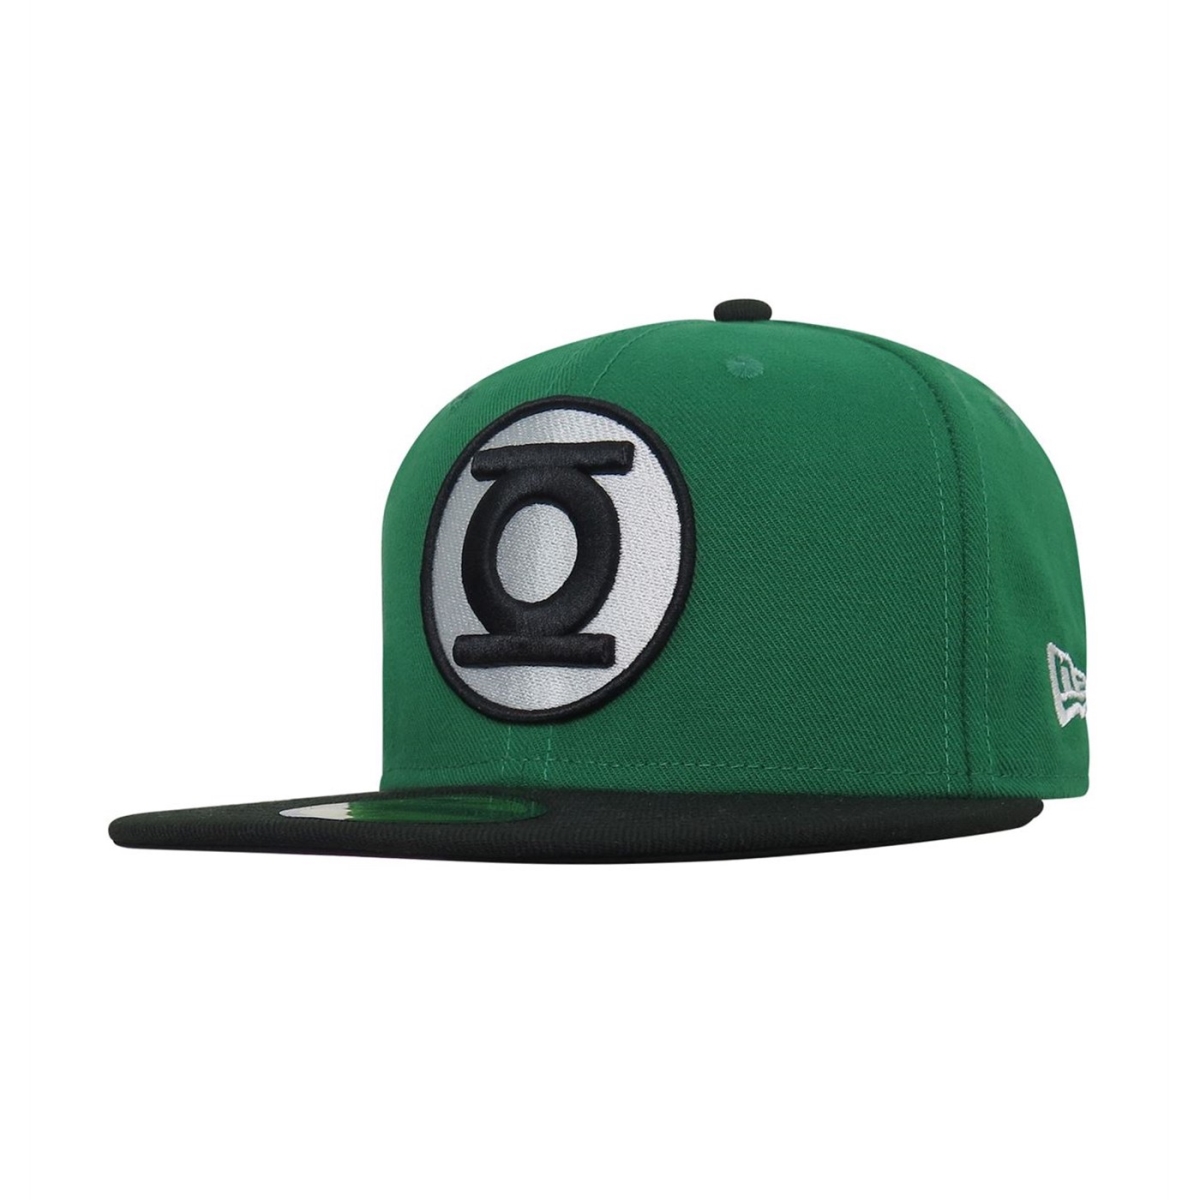 Picture of Green Lantern hatglhaljordan5950-738-7 3-8 Fitted Green Lantern Hal Jordan 59Fifty Fitted Hat - Size 7.375